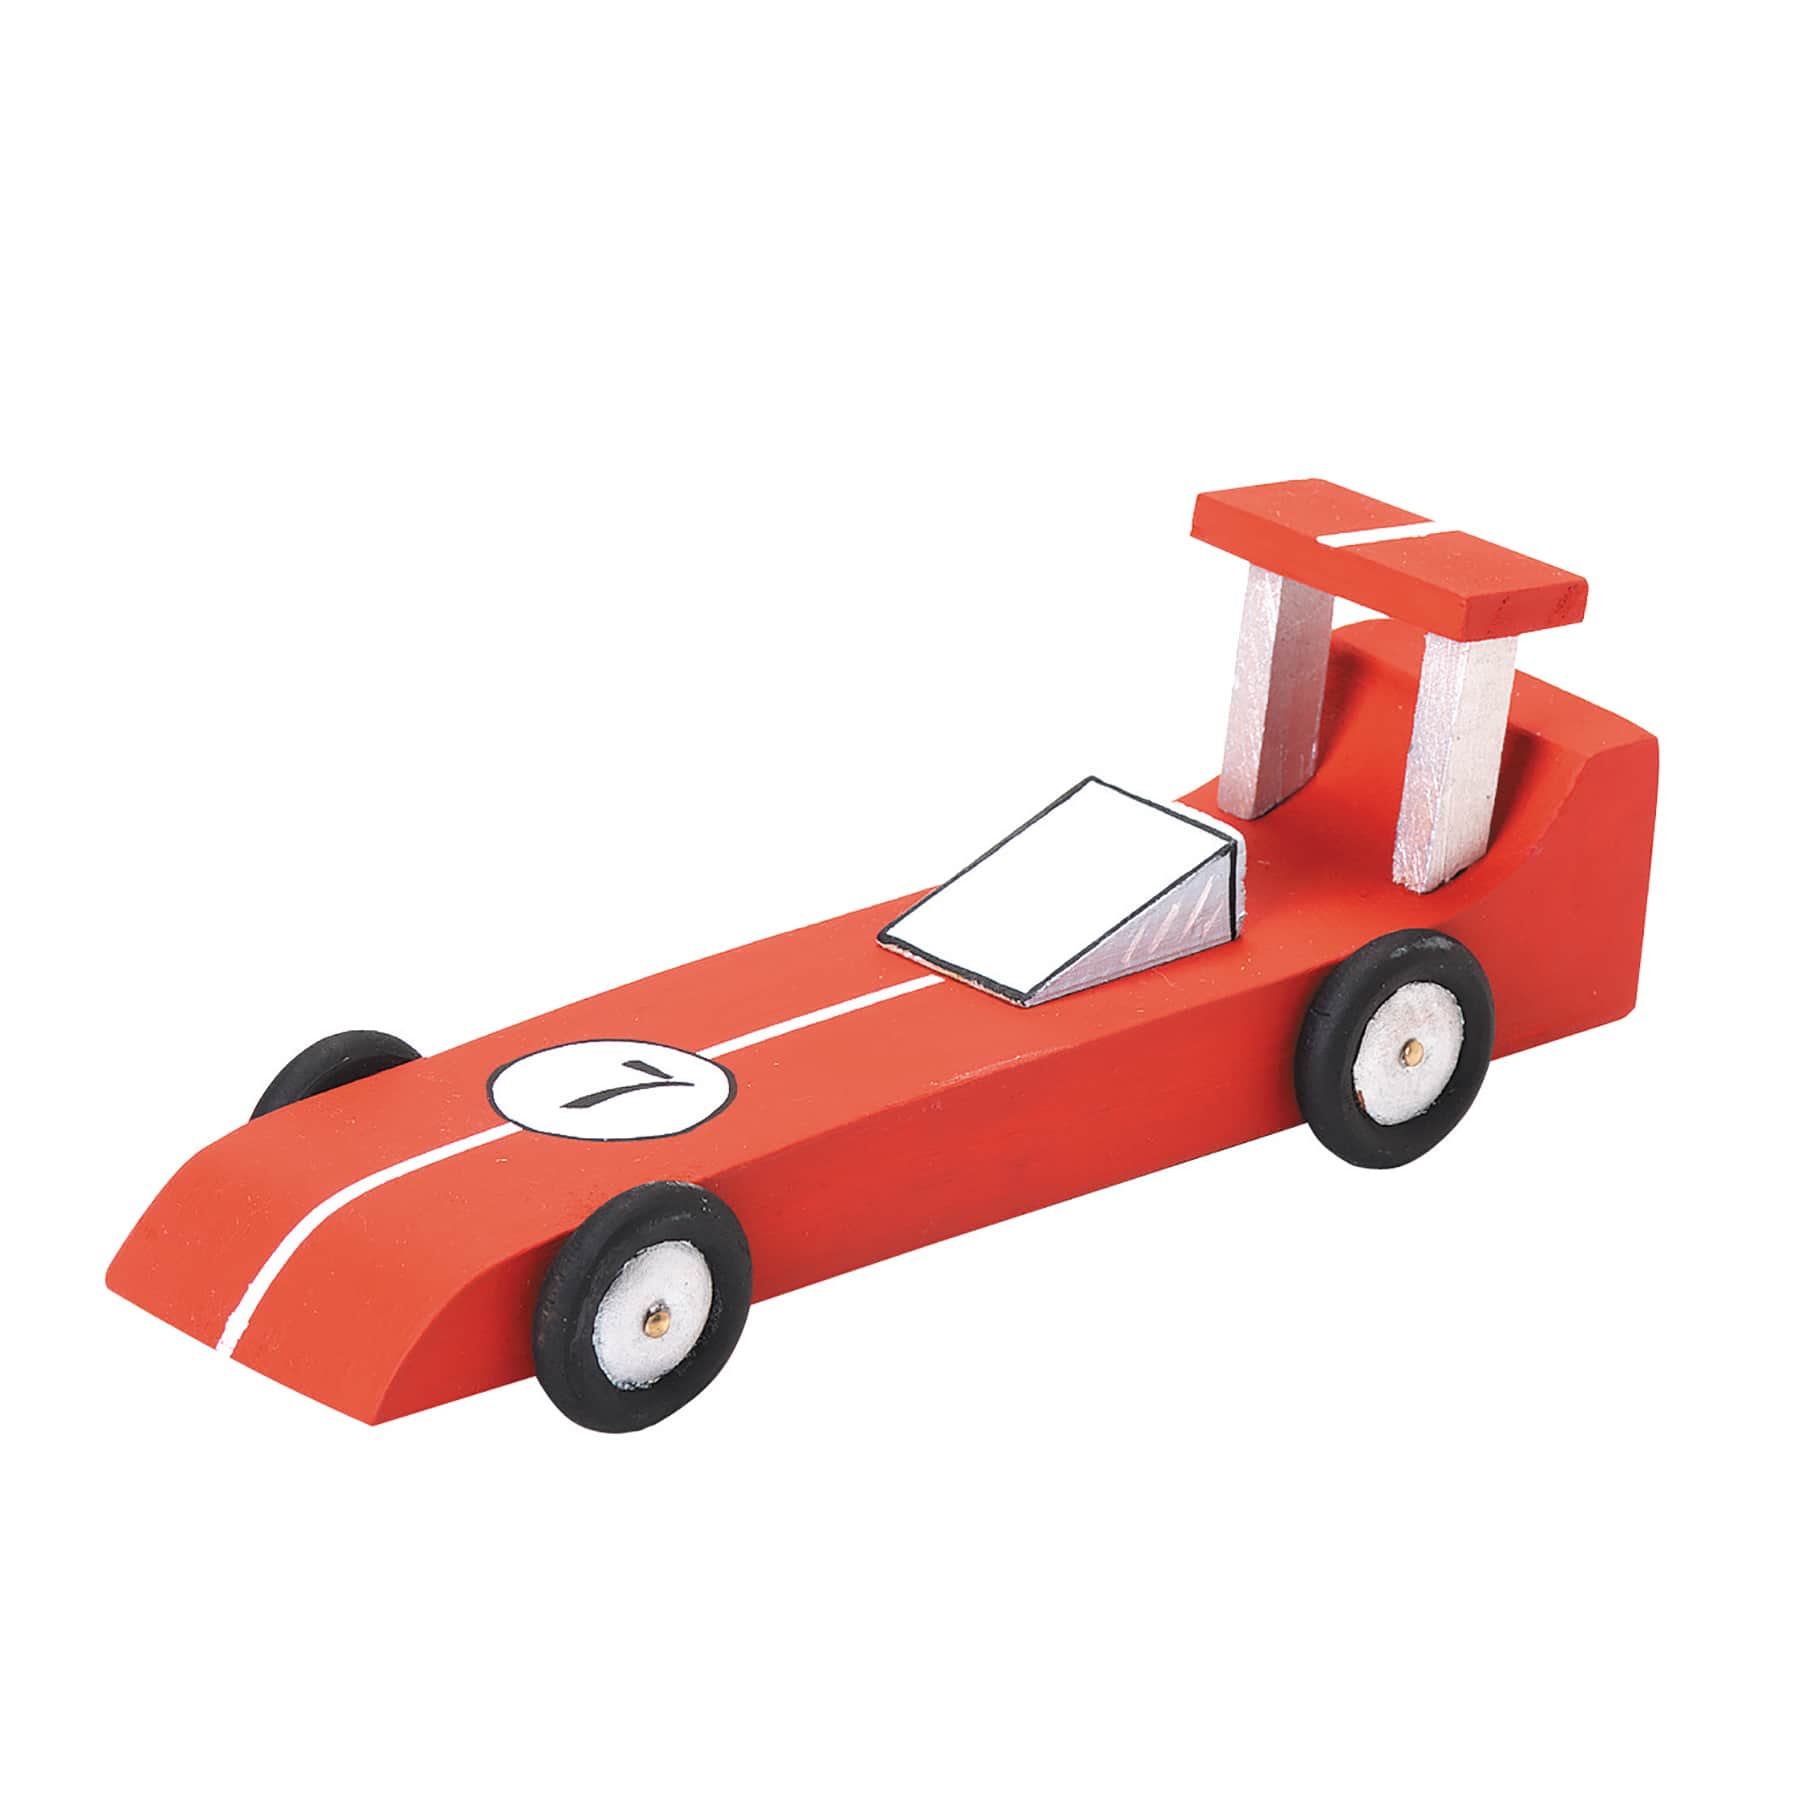 Wooden Race Car Model Kit by Creatology&#x2122;